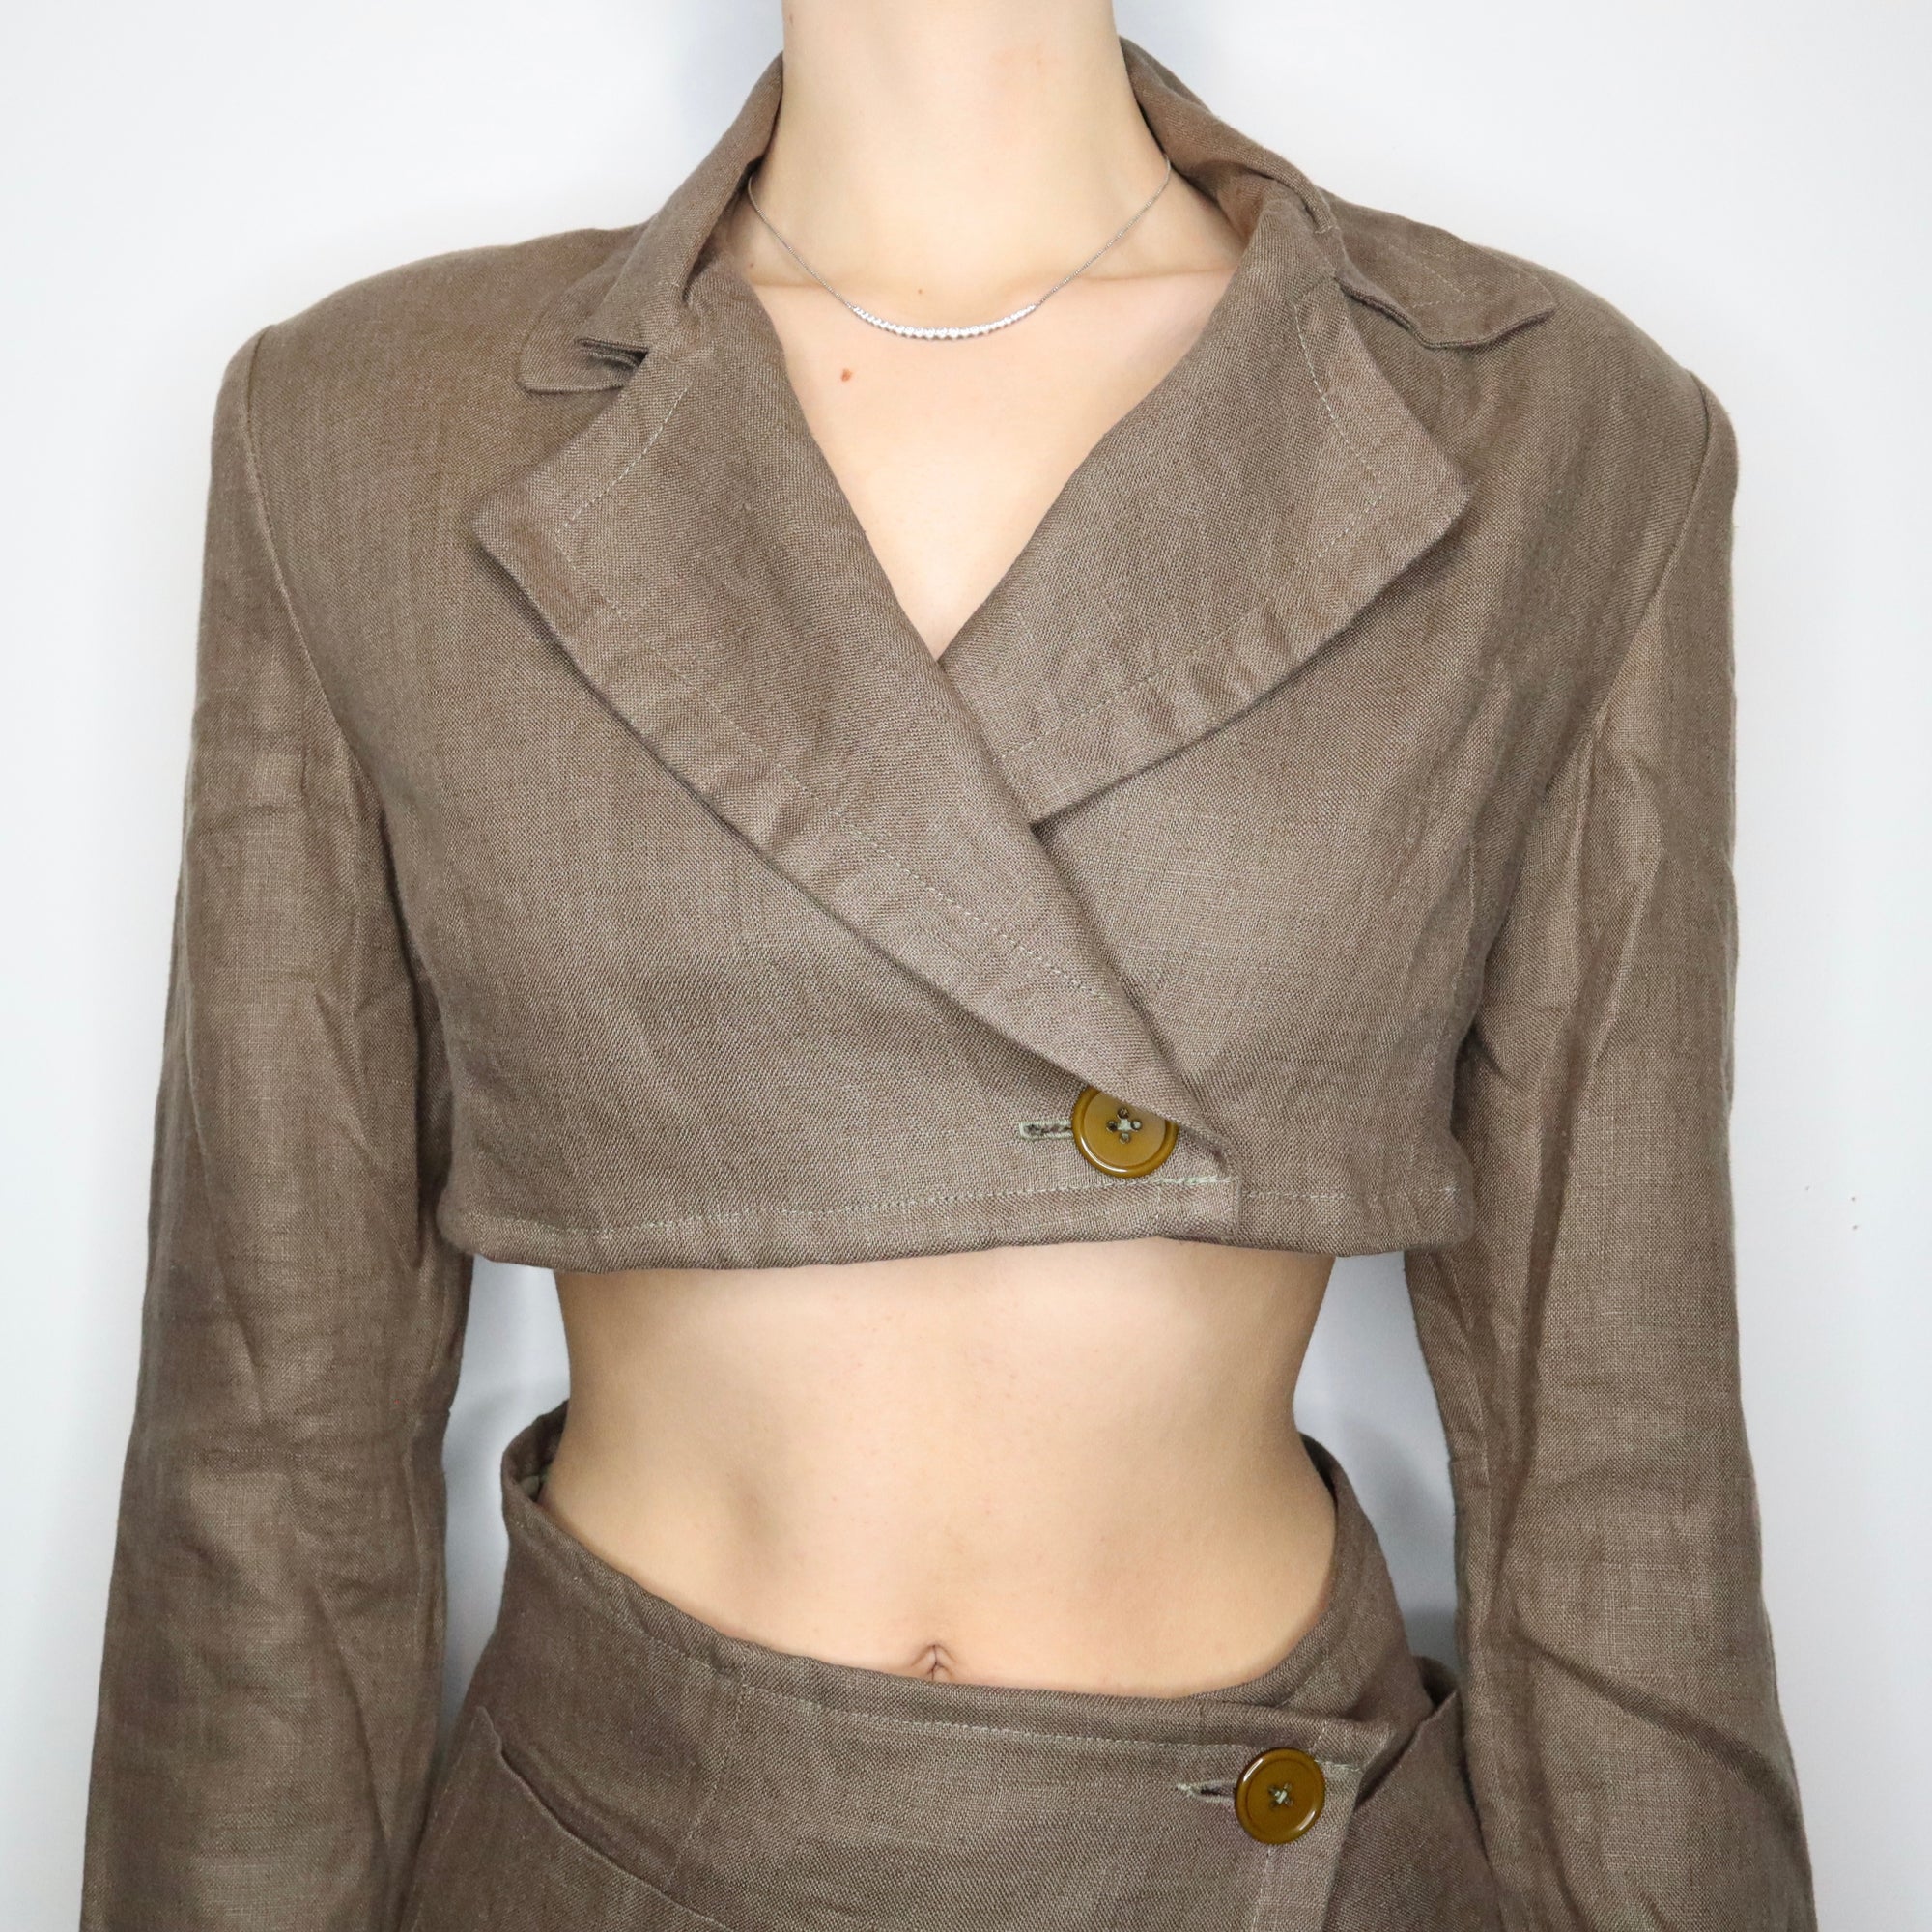 Cropped Blazer and Skirt Set (Medium)